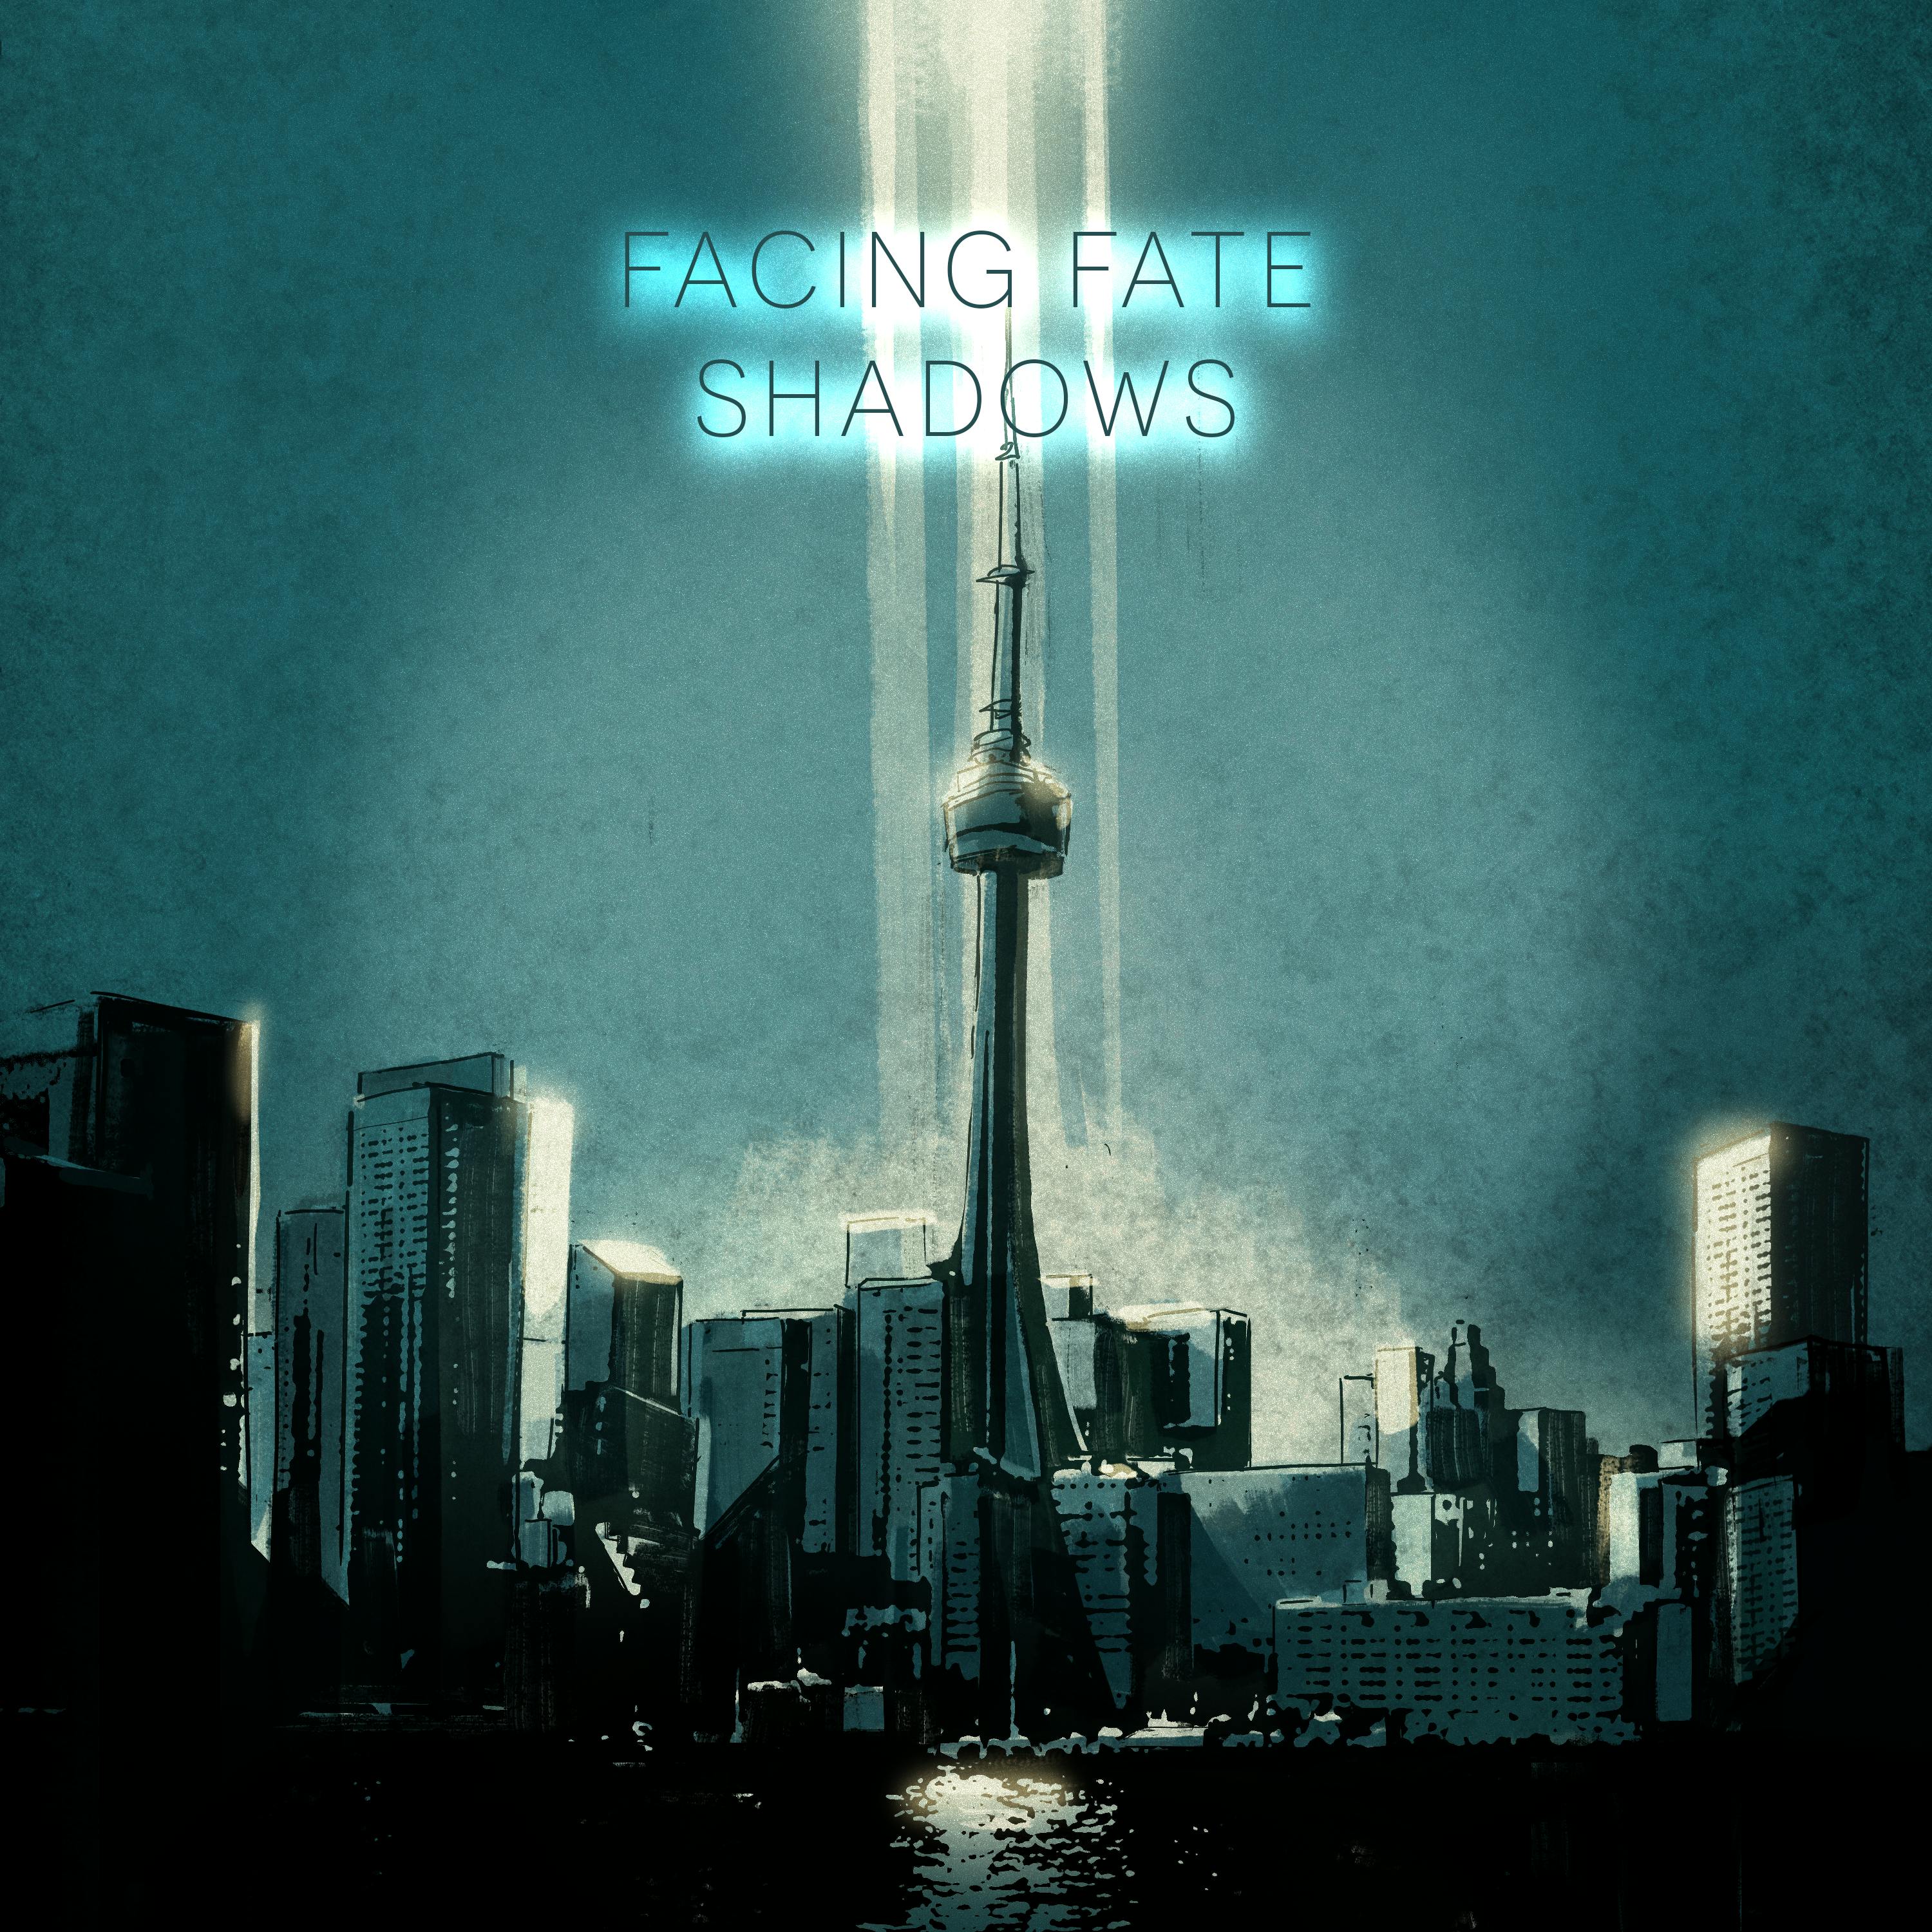 Shadows; Episode 01 - Premonitions